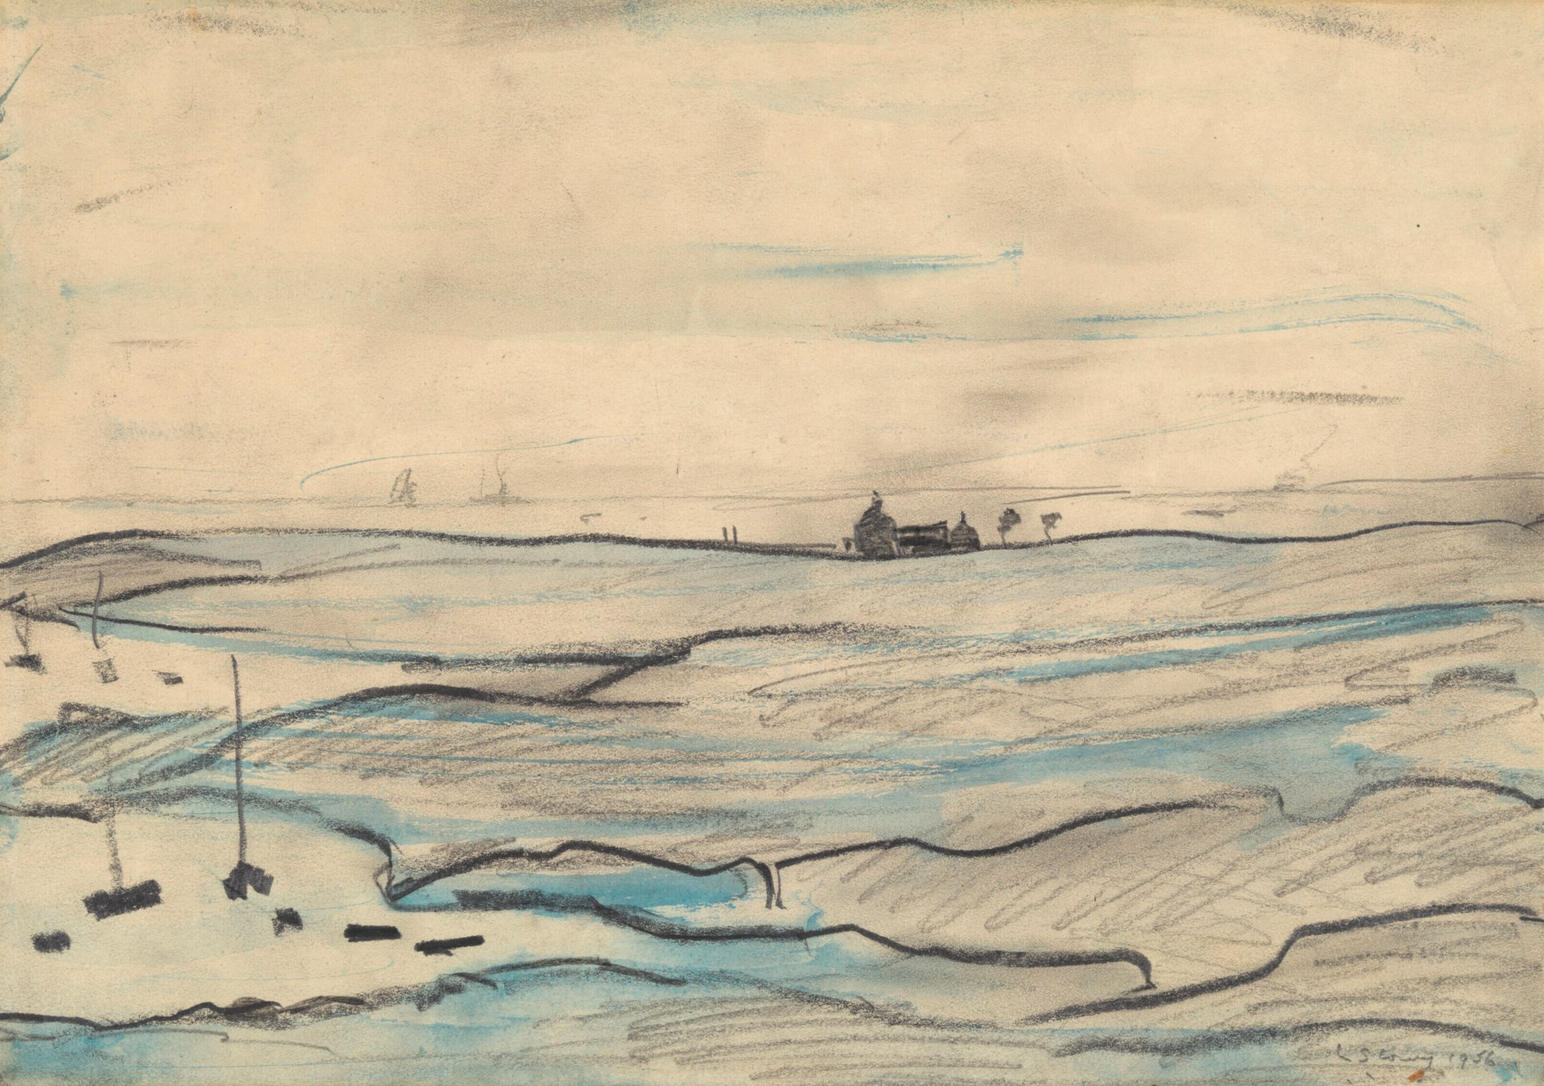 Coastal scene (1956) by Laurence Stephen Lowry (1887 - 1976), English artist.